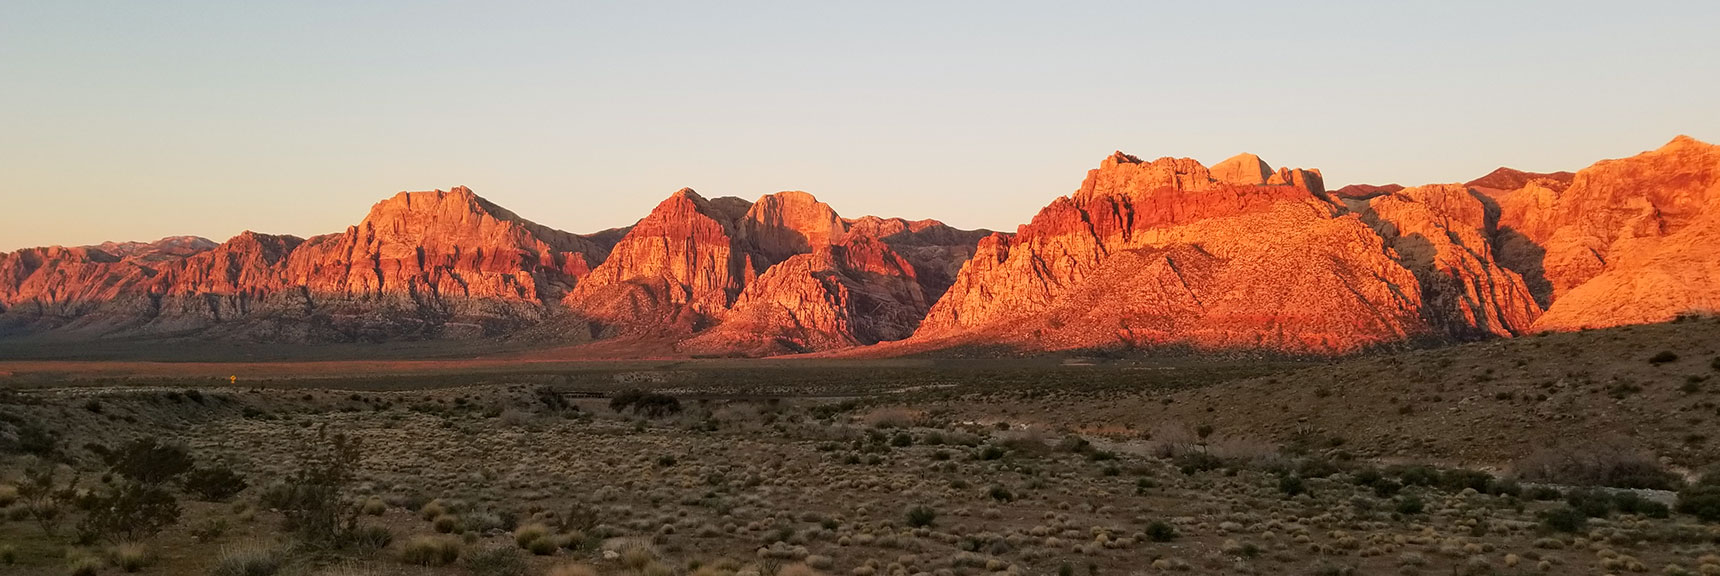 Red Rock Park Sunrise, Nevada